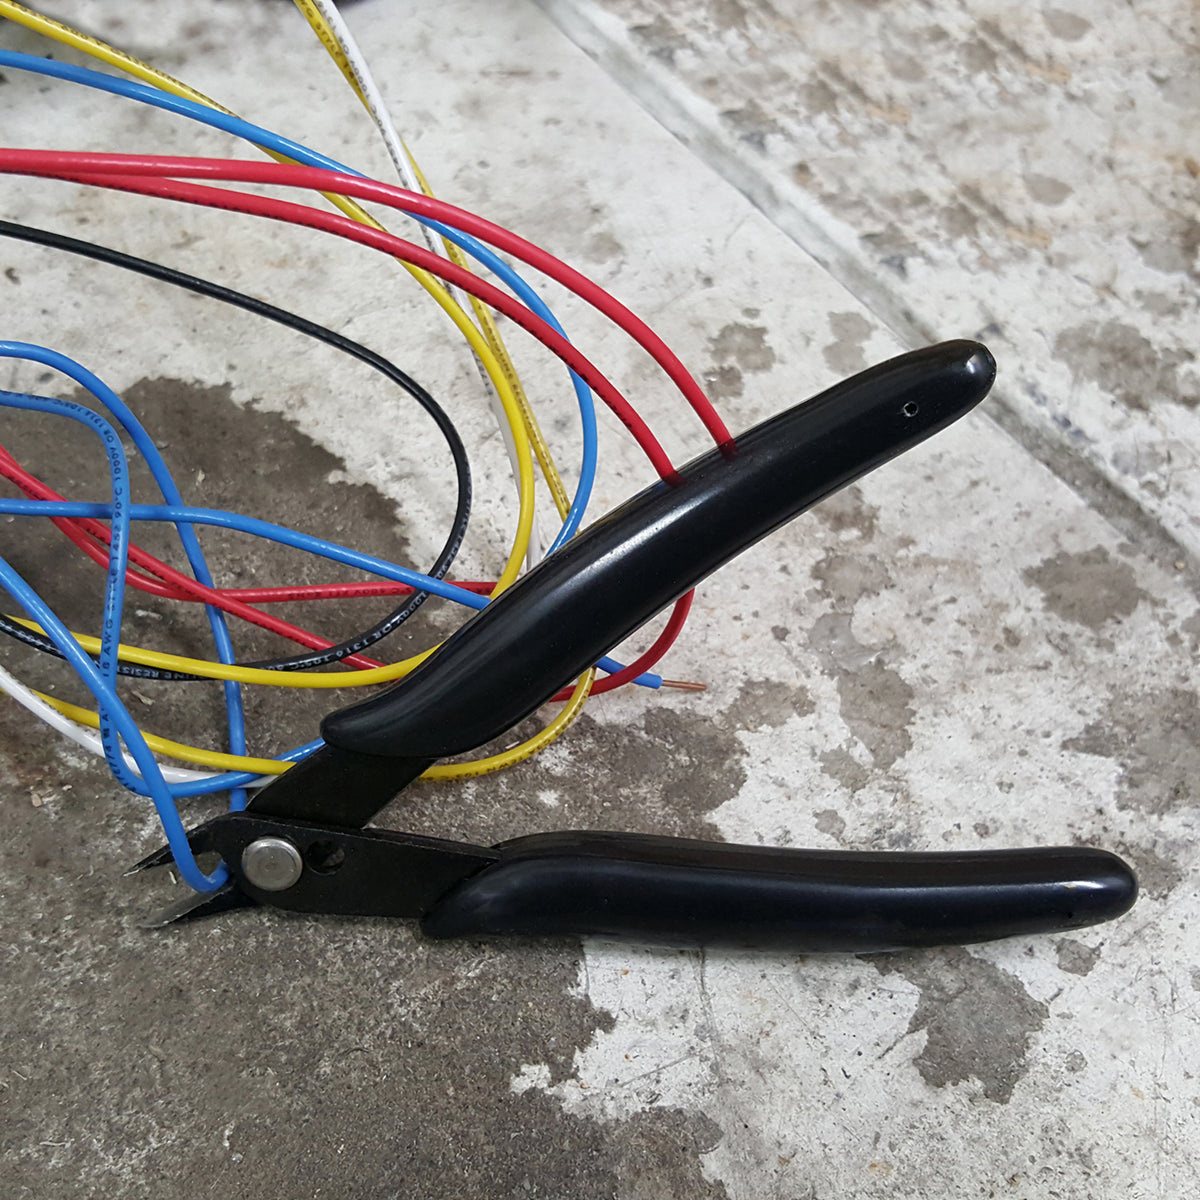 Wire Flush Cutter Tool - 18 Gauge Electrical Nippers Micro Cutter, 5pk